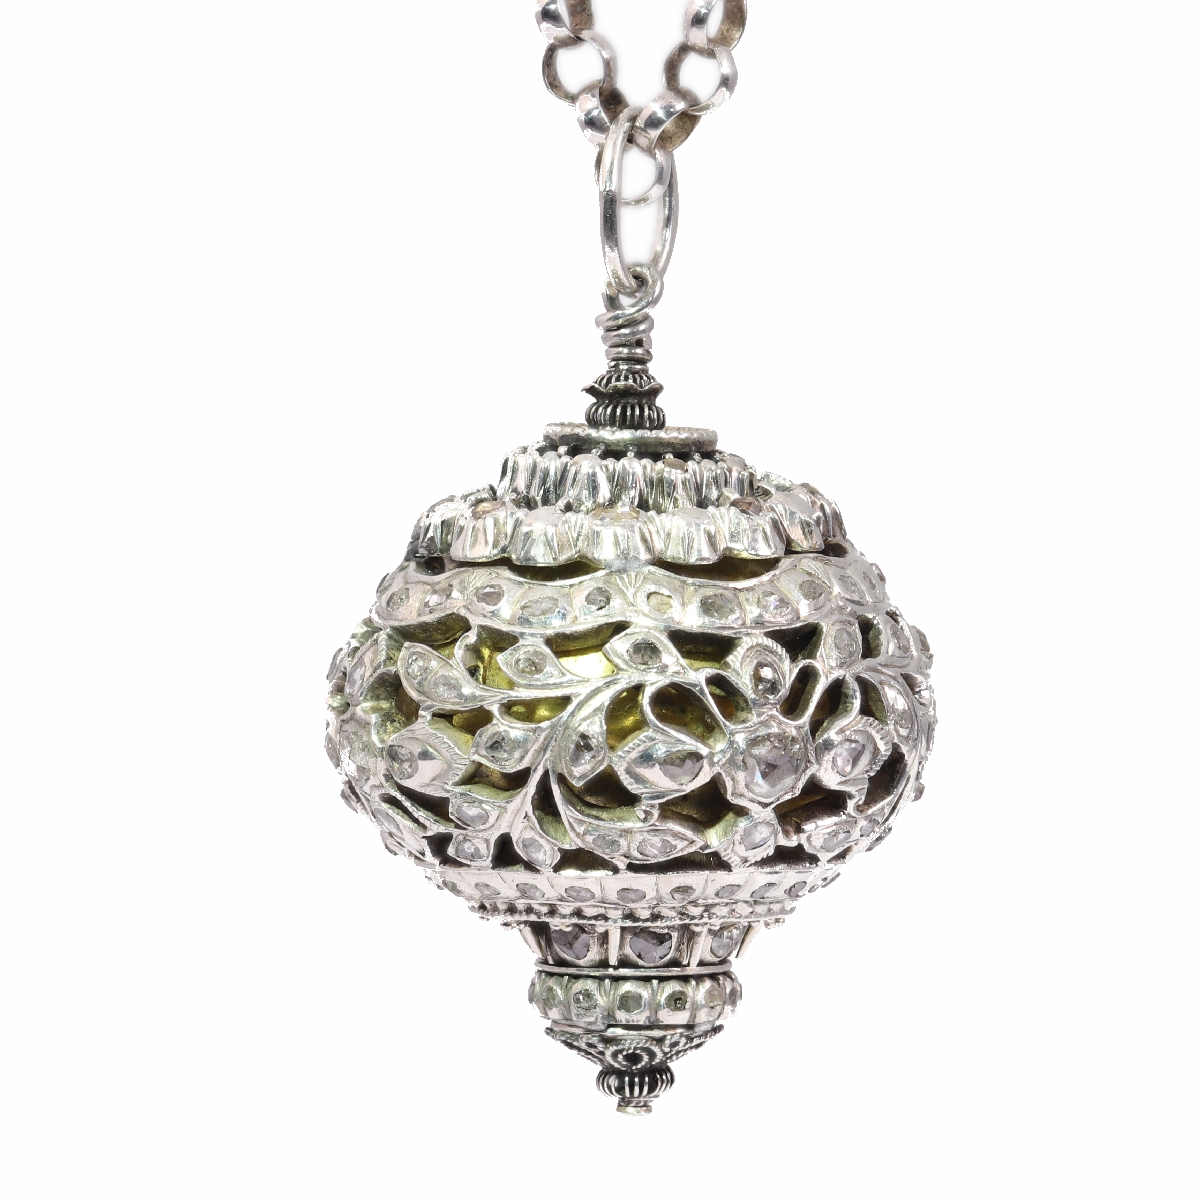 Antique 16th century diamond embellished pomander sphere